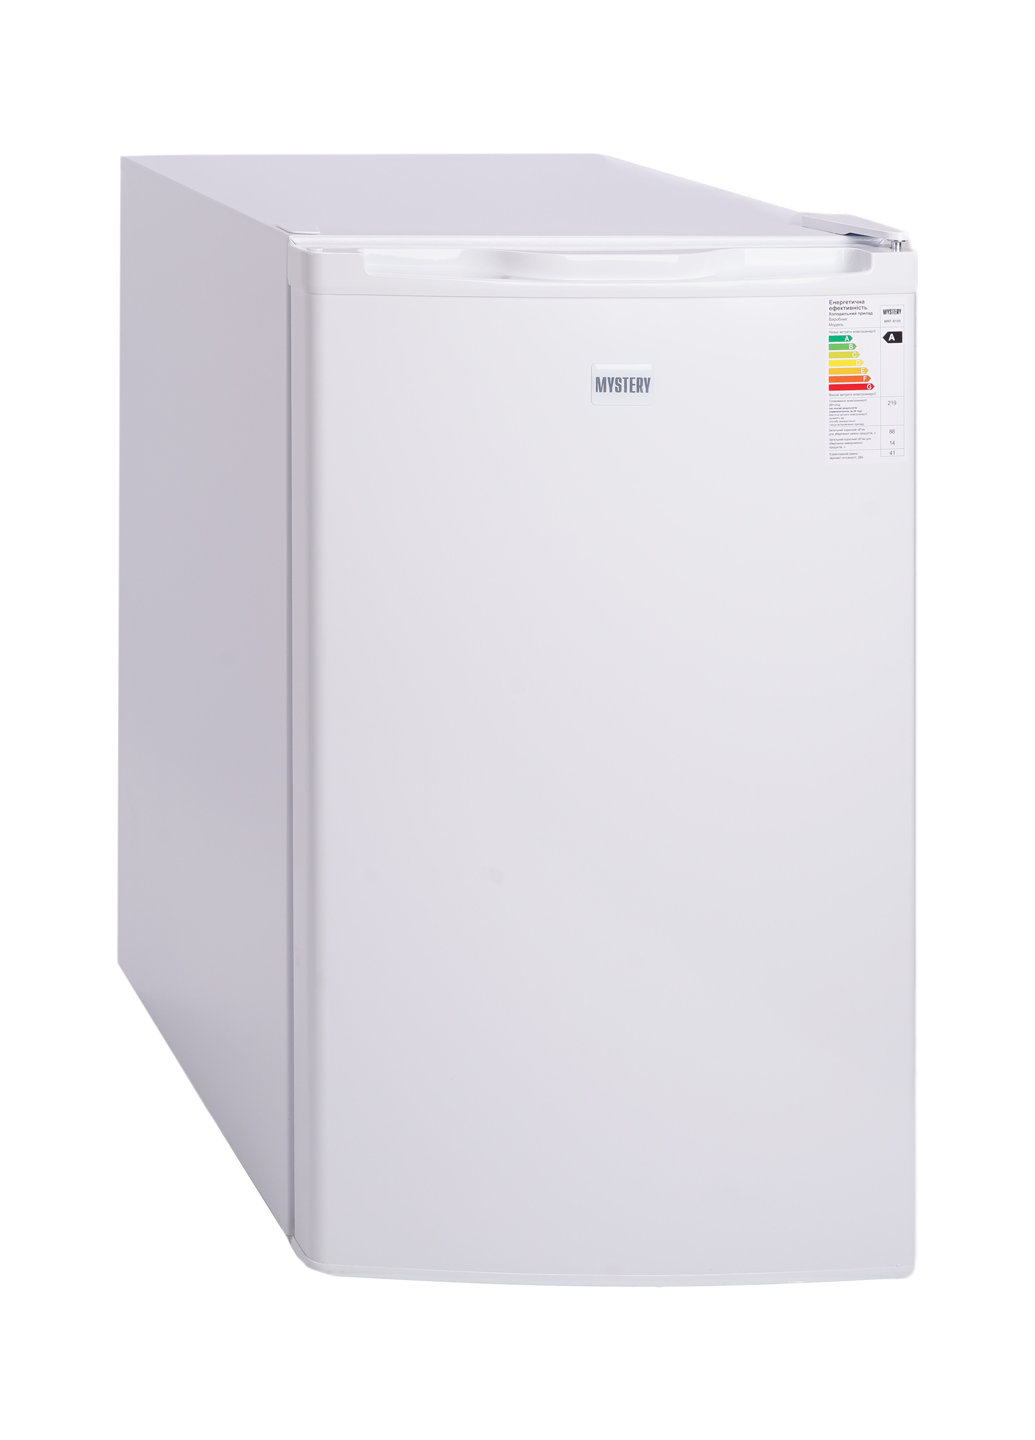 Refrigerator Mystery MRF-8105W